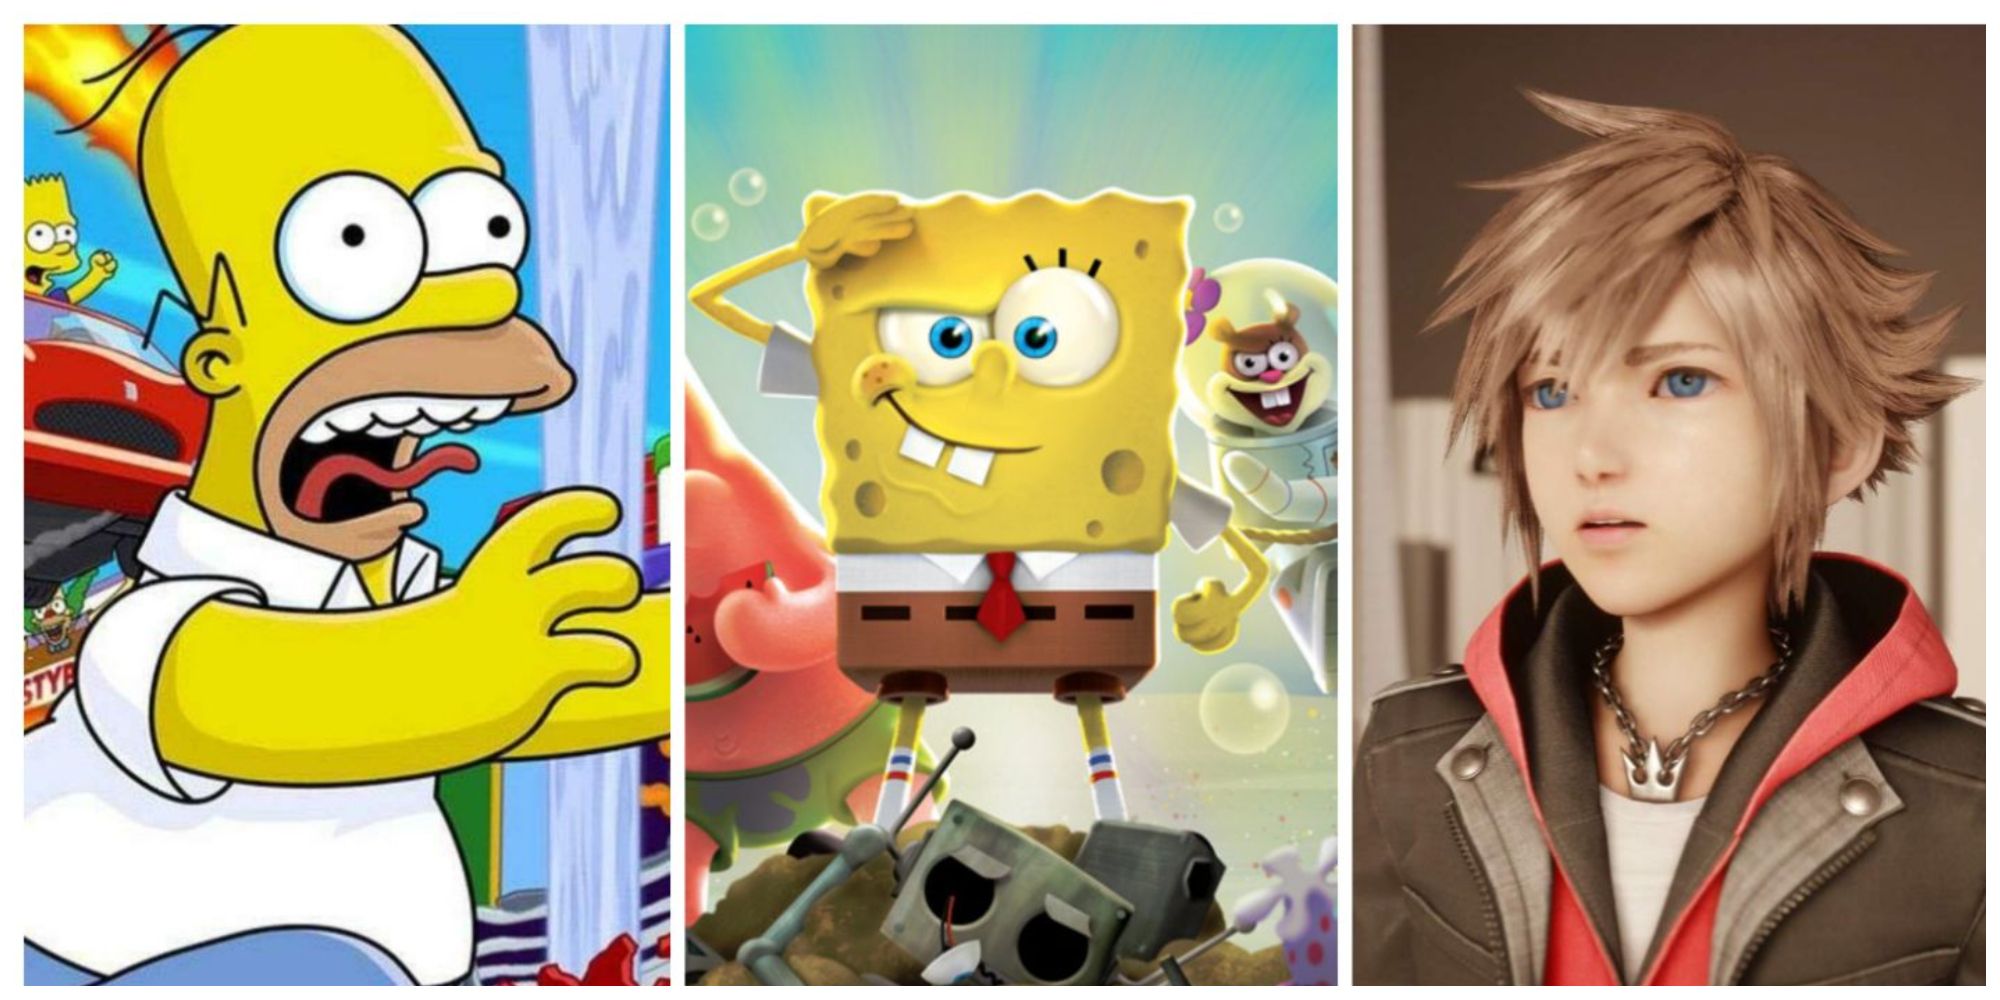 Split image featuring Homer Simpson, Spongebob, and Sora from Kingdom Hearts